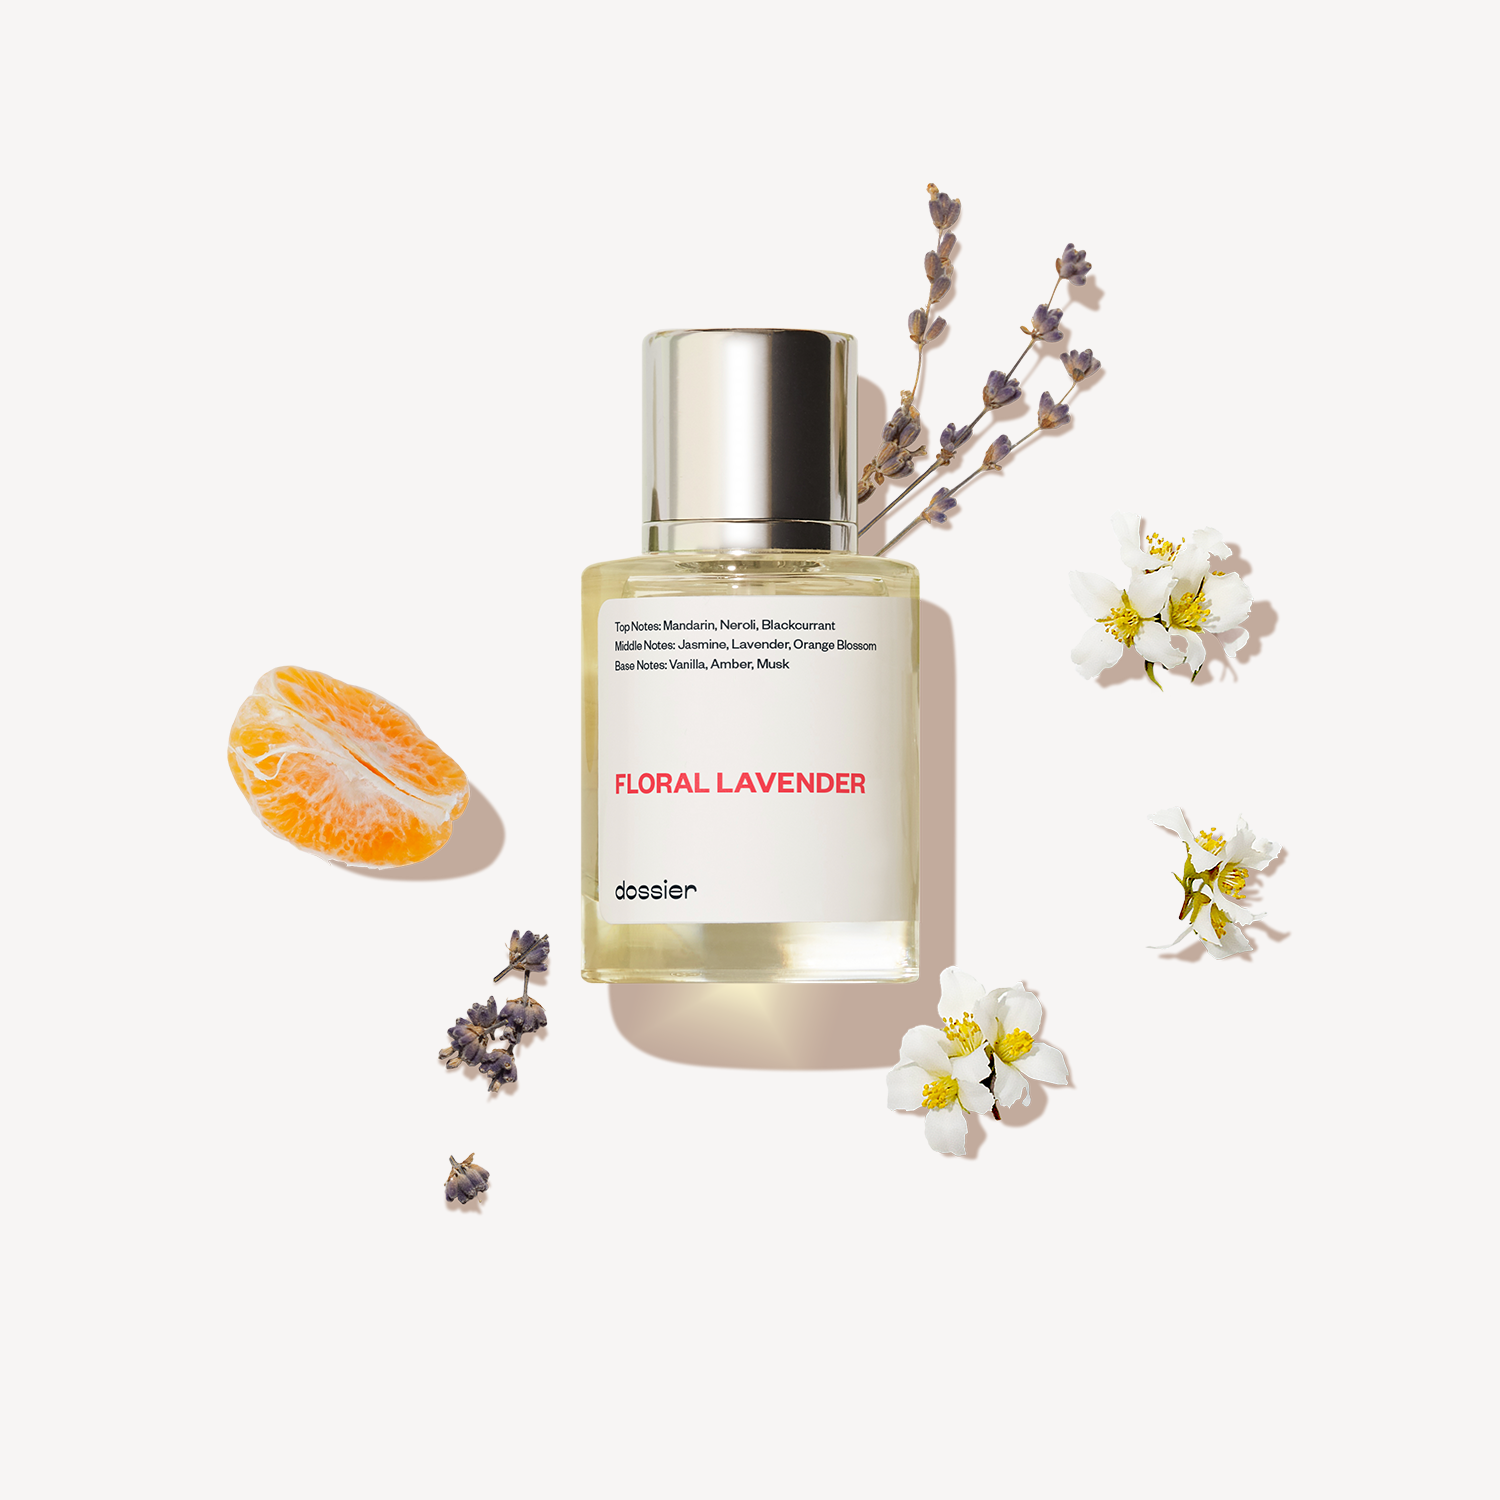 Libre YSL Impression - Floral Lavender - Dossier Perfume - Woman - Perfume Dupe